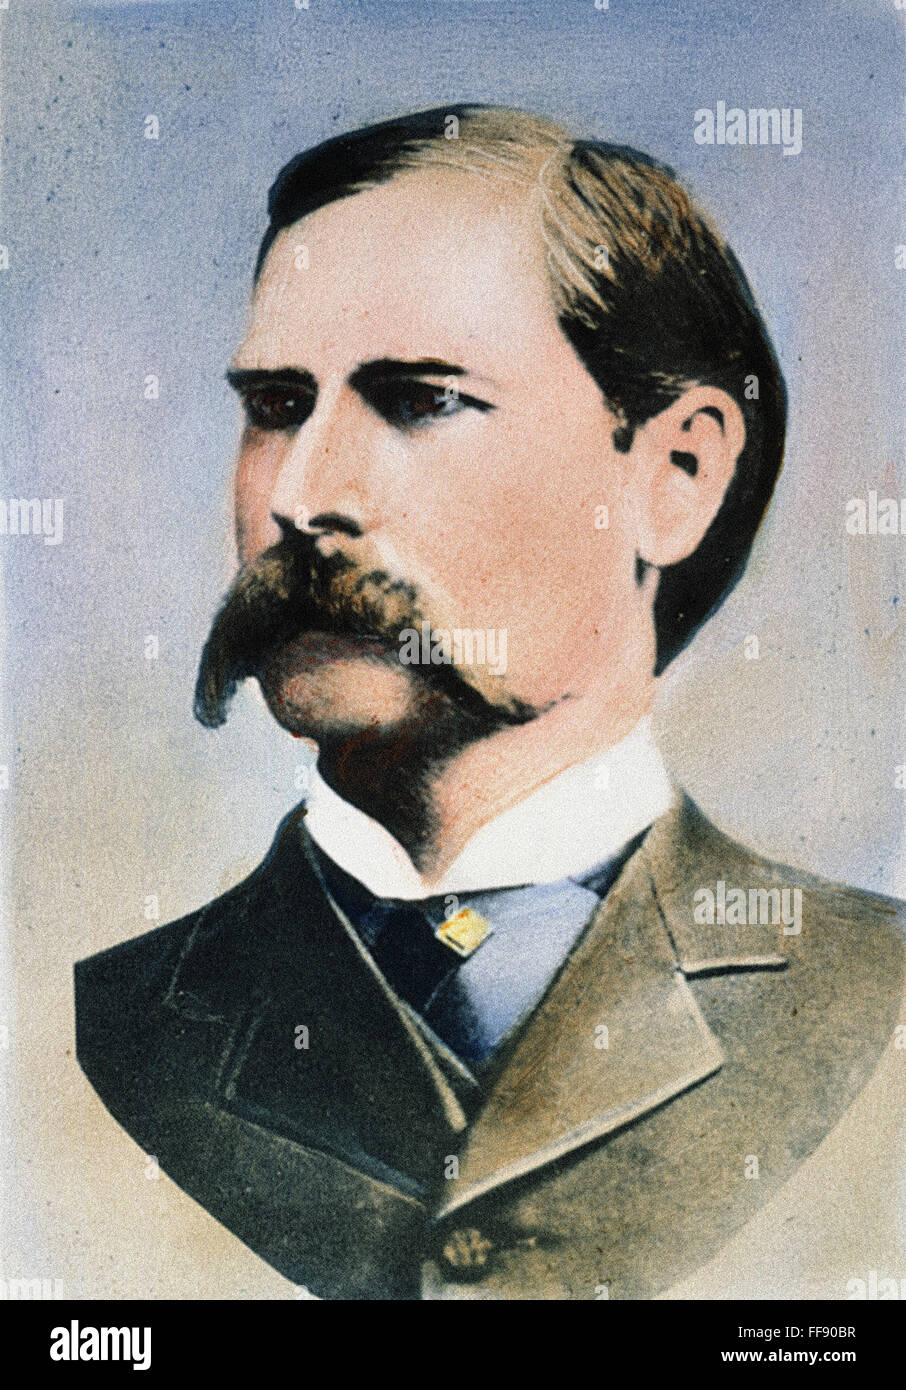 WYATT EARP (1848-1929). /nAmerican lawman. Oil over a photograph. Stock Photo